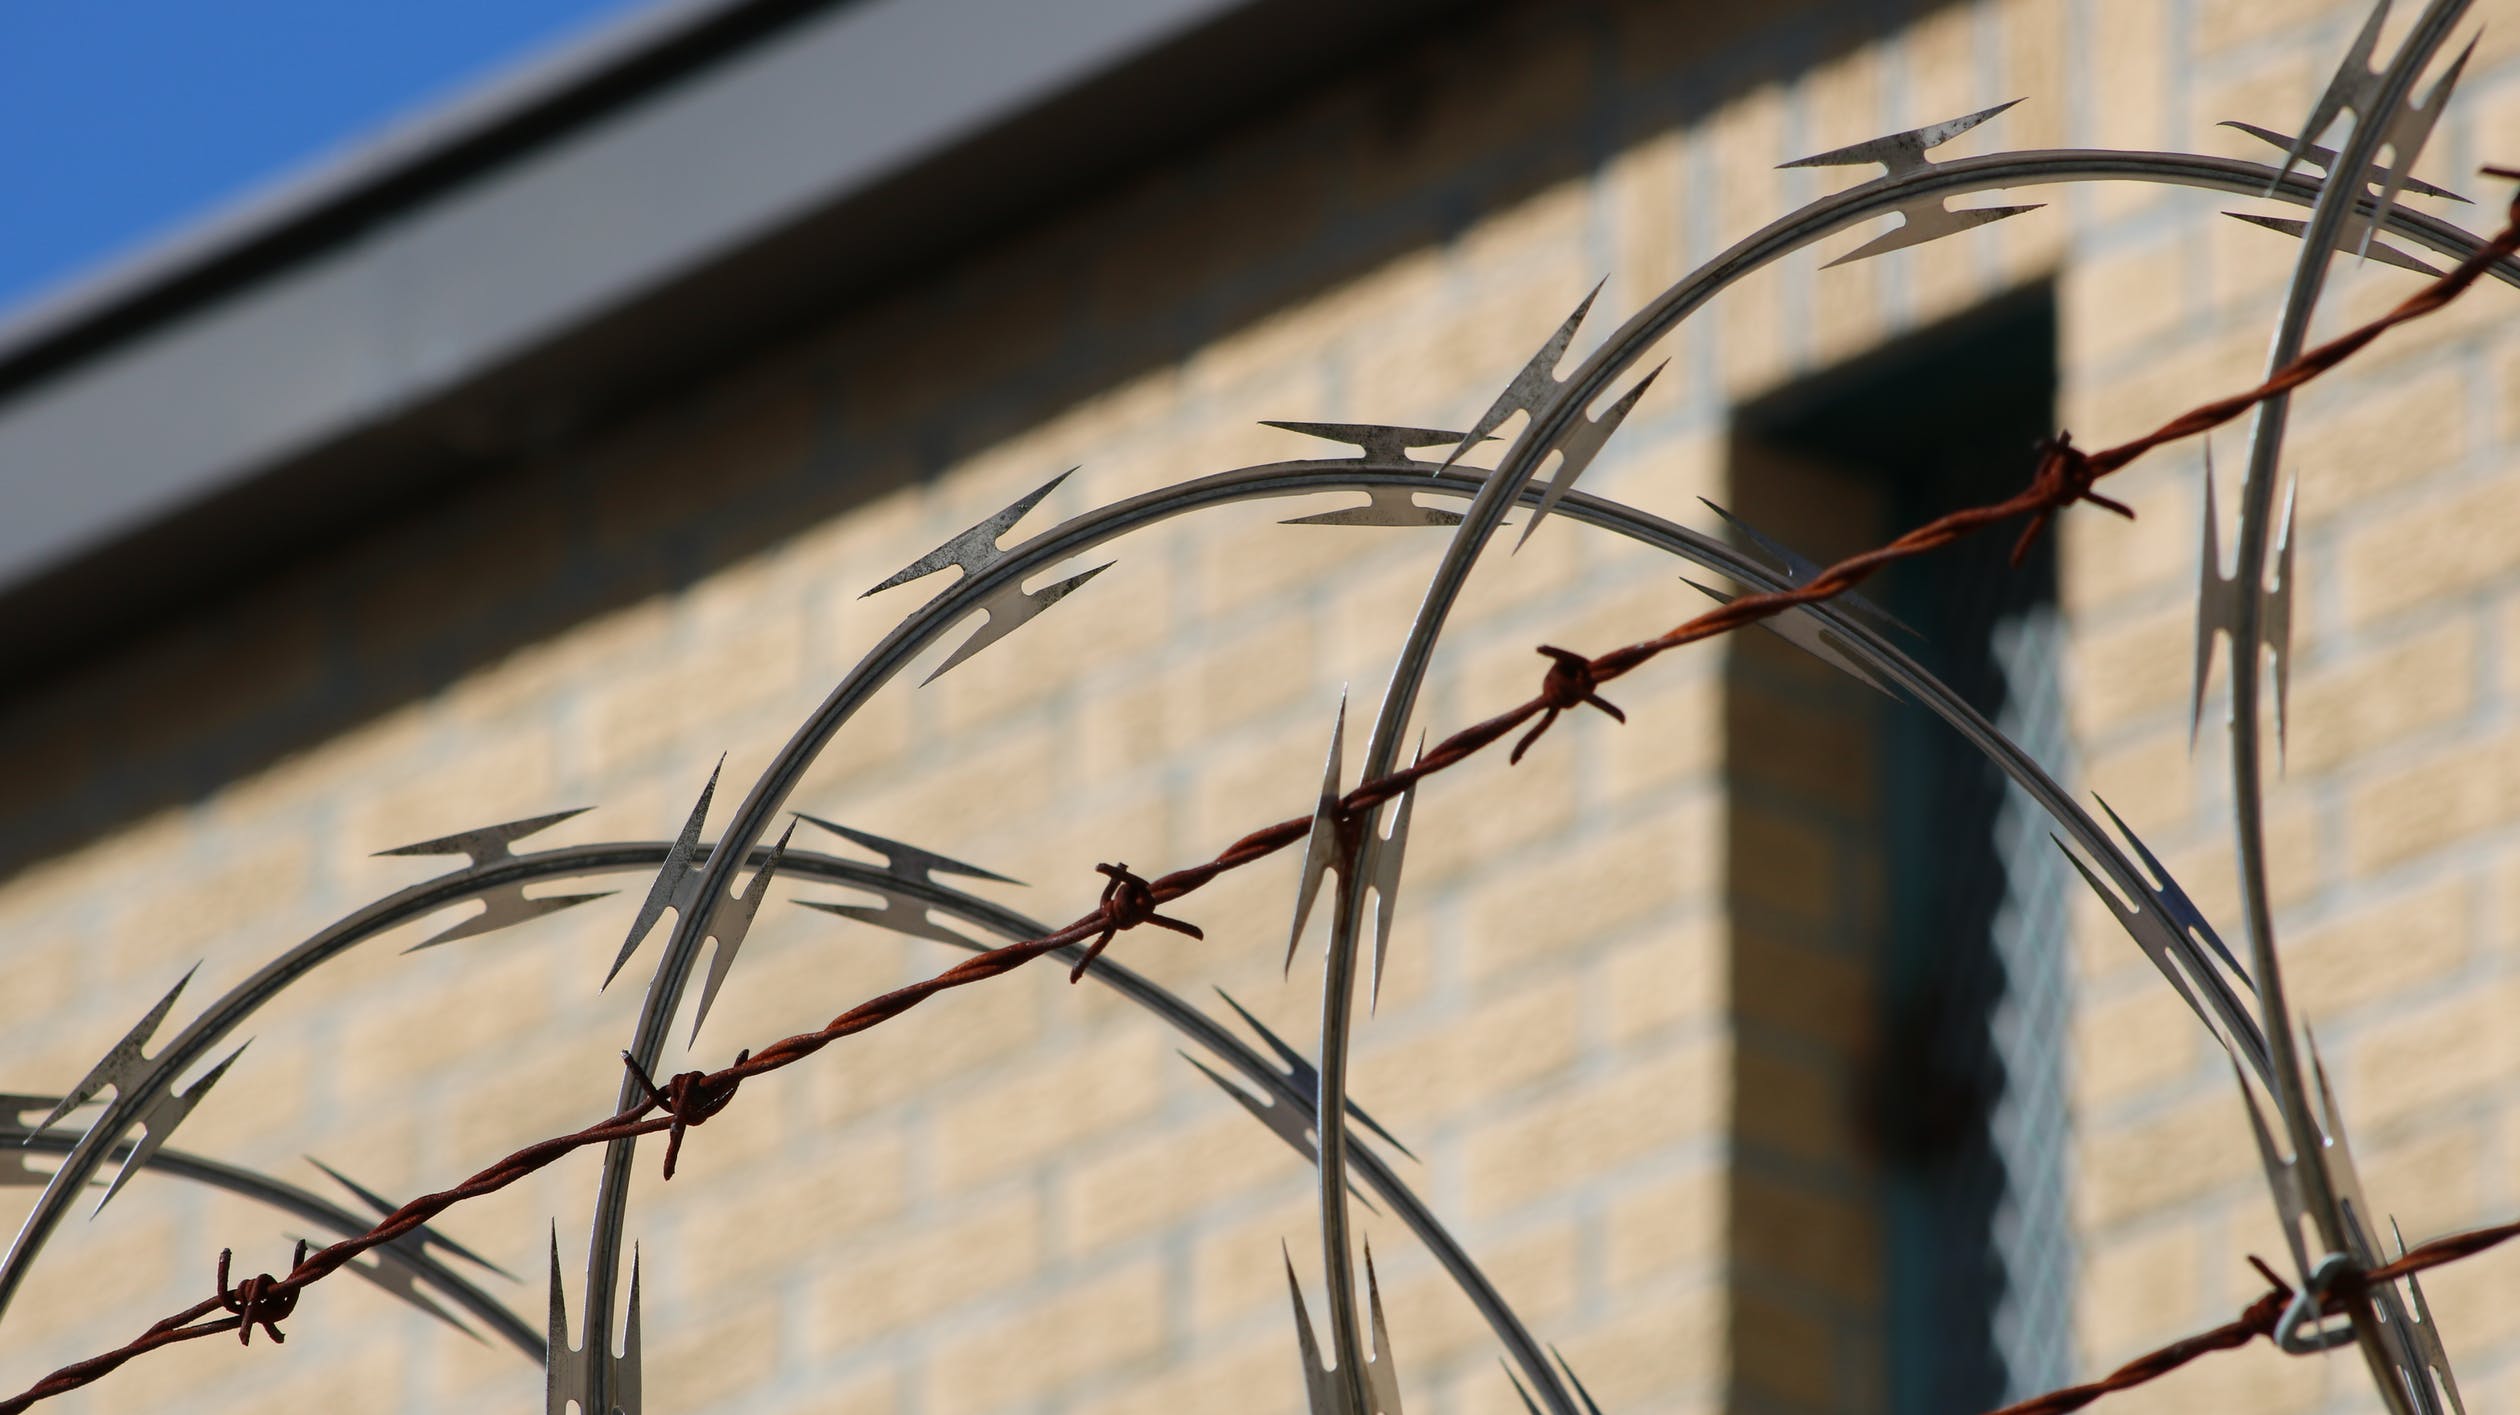 THURSDAY: Legislature poised to free 20% of N.J. inmates